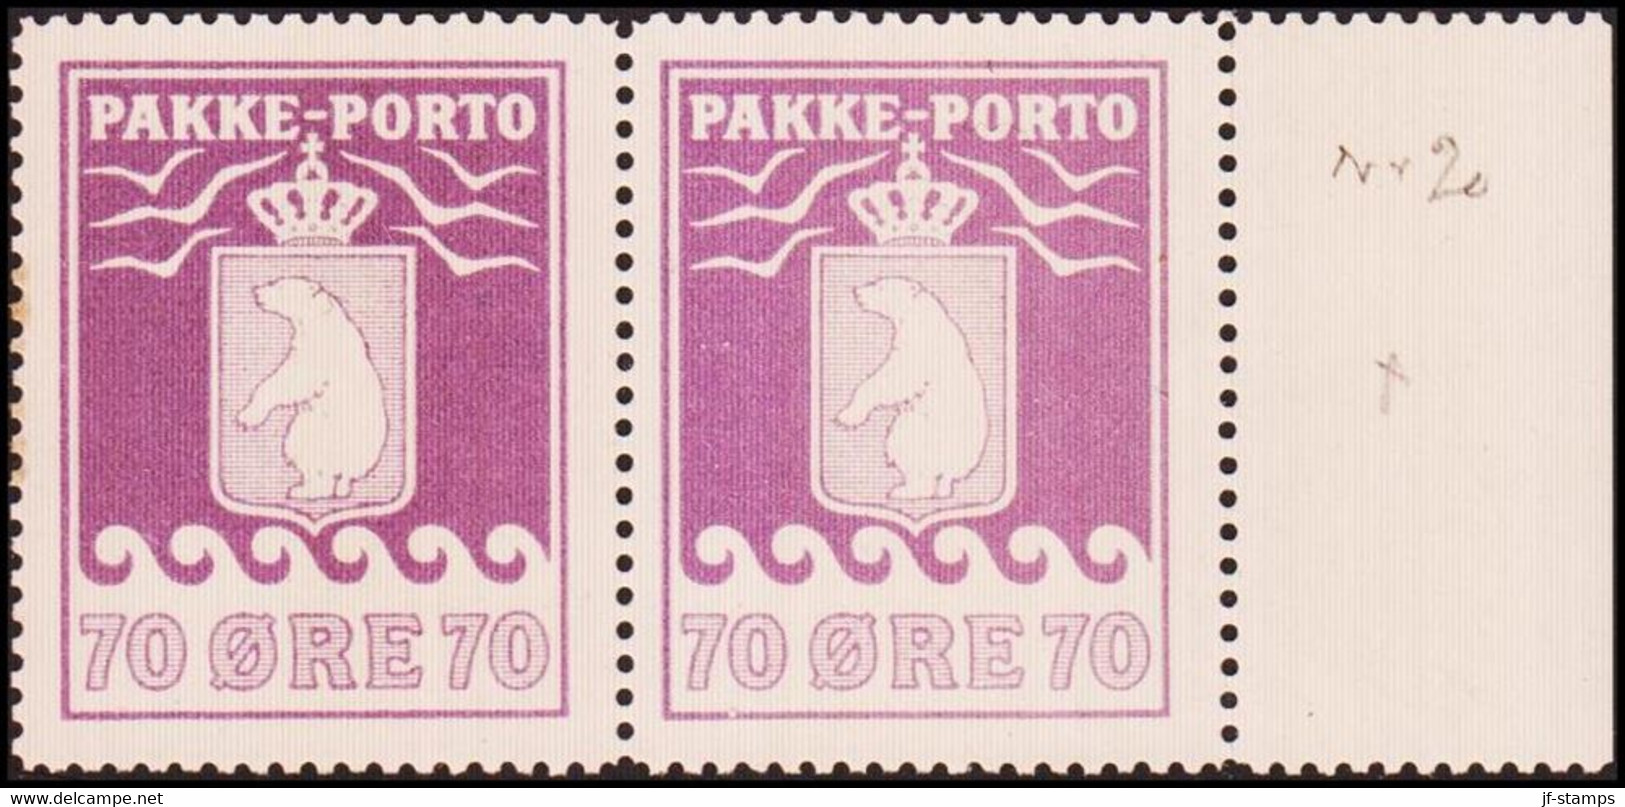 1937. PAKKE PORTO. 70 øre Pale Violet. Andreasen & Lachmann Litho. Perf. 11. Never Hi... (Michel 13) - JF415146 - Pacchi Postali